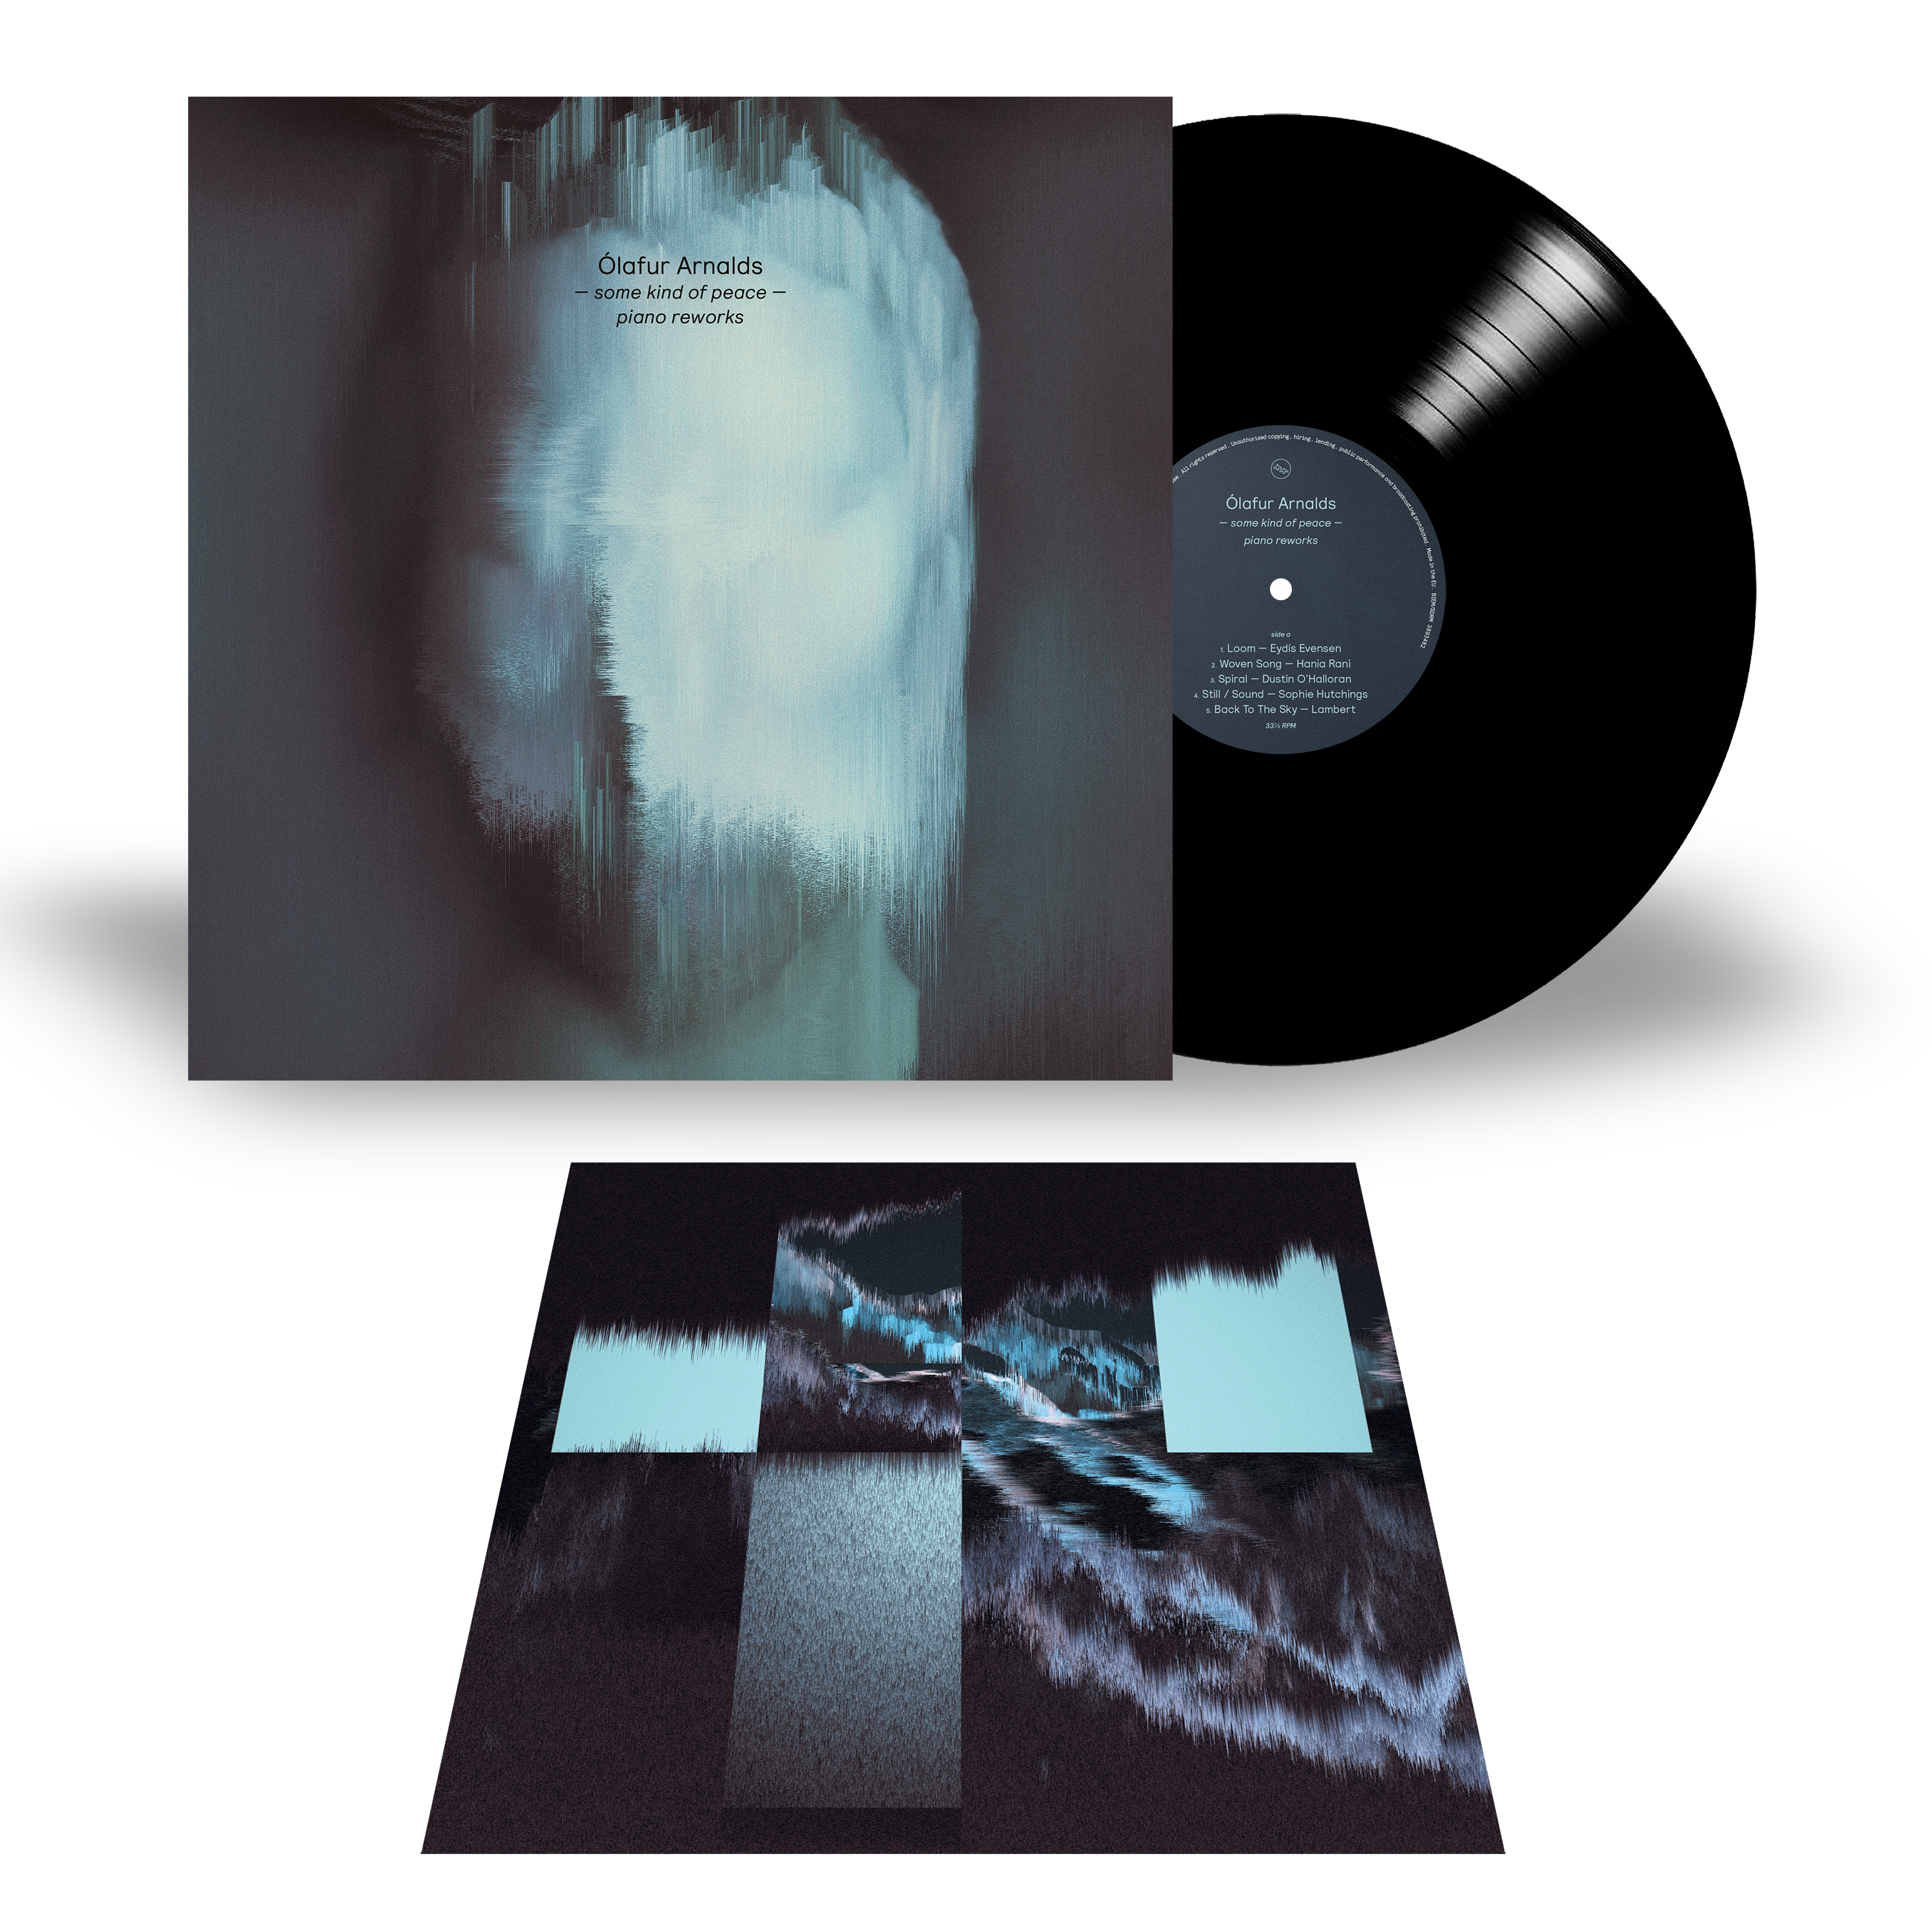 Olafur Arnalds - some kind of peace — piano reworks: Vinyl LP